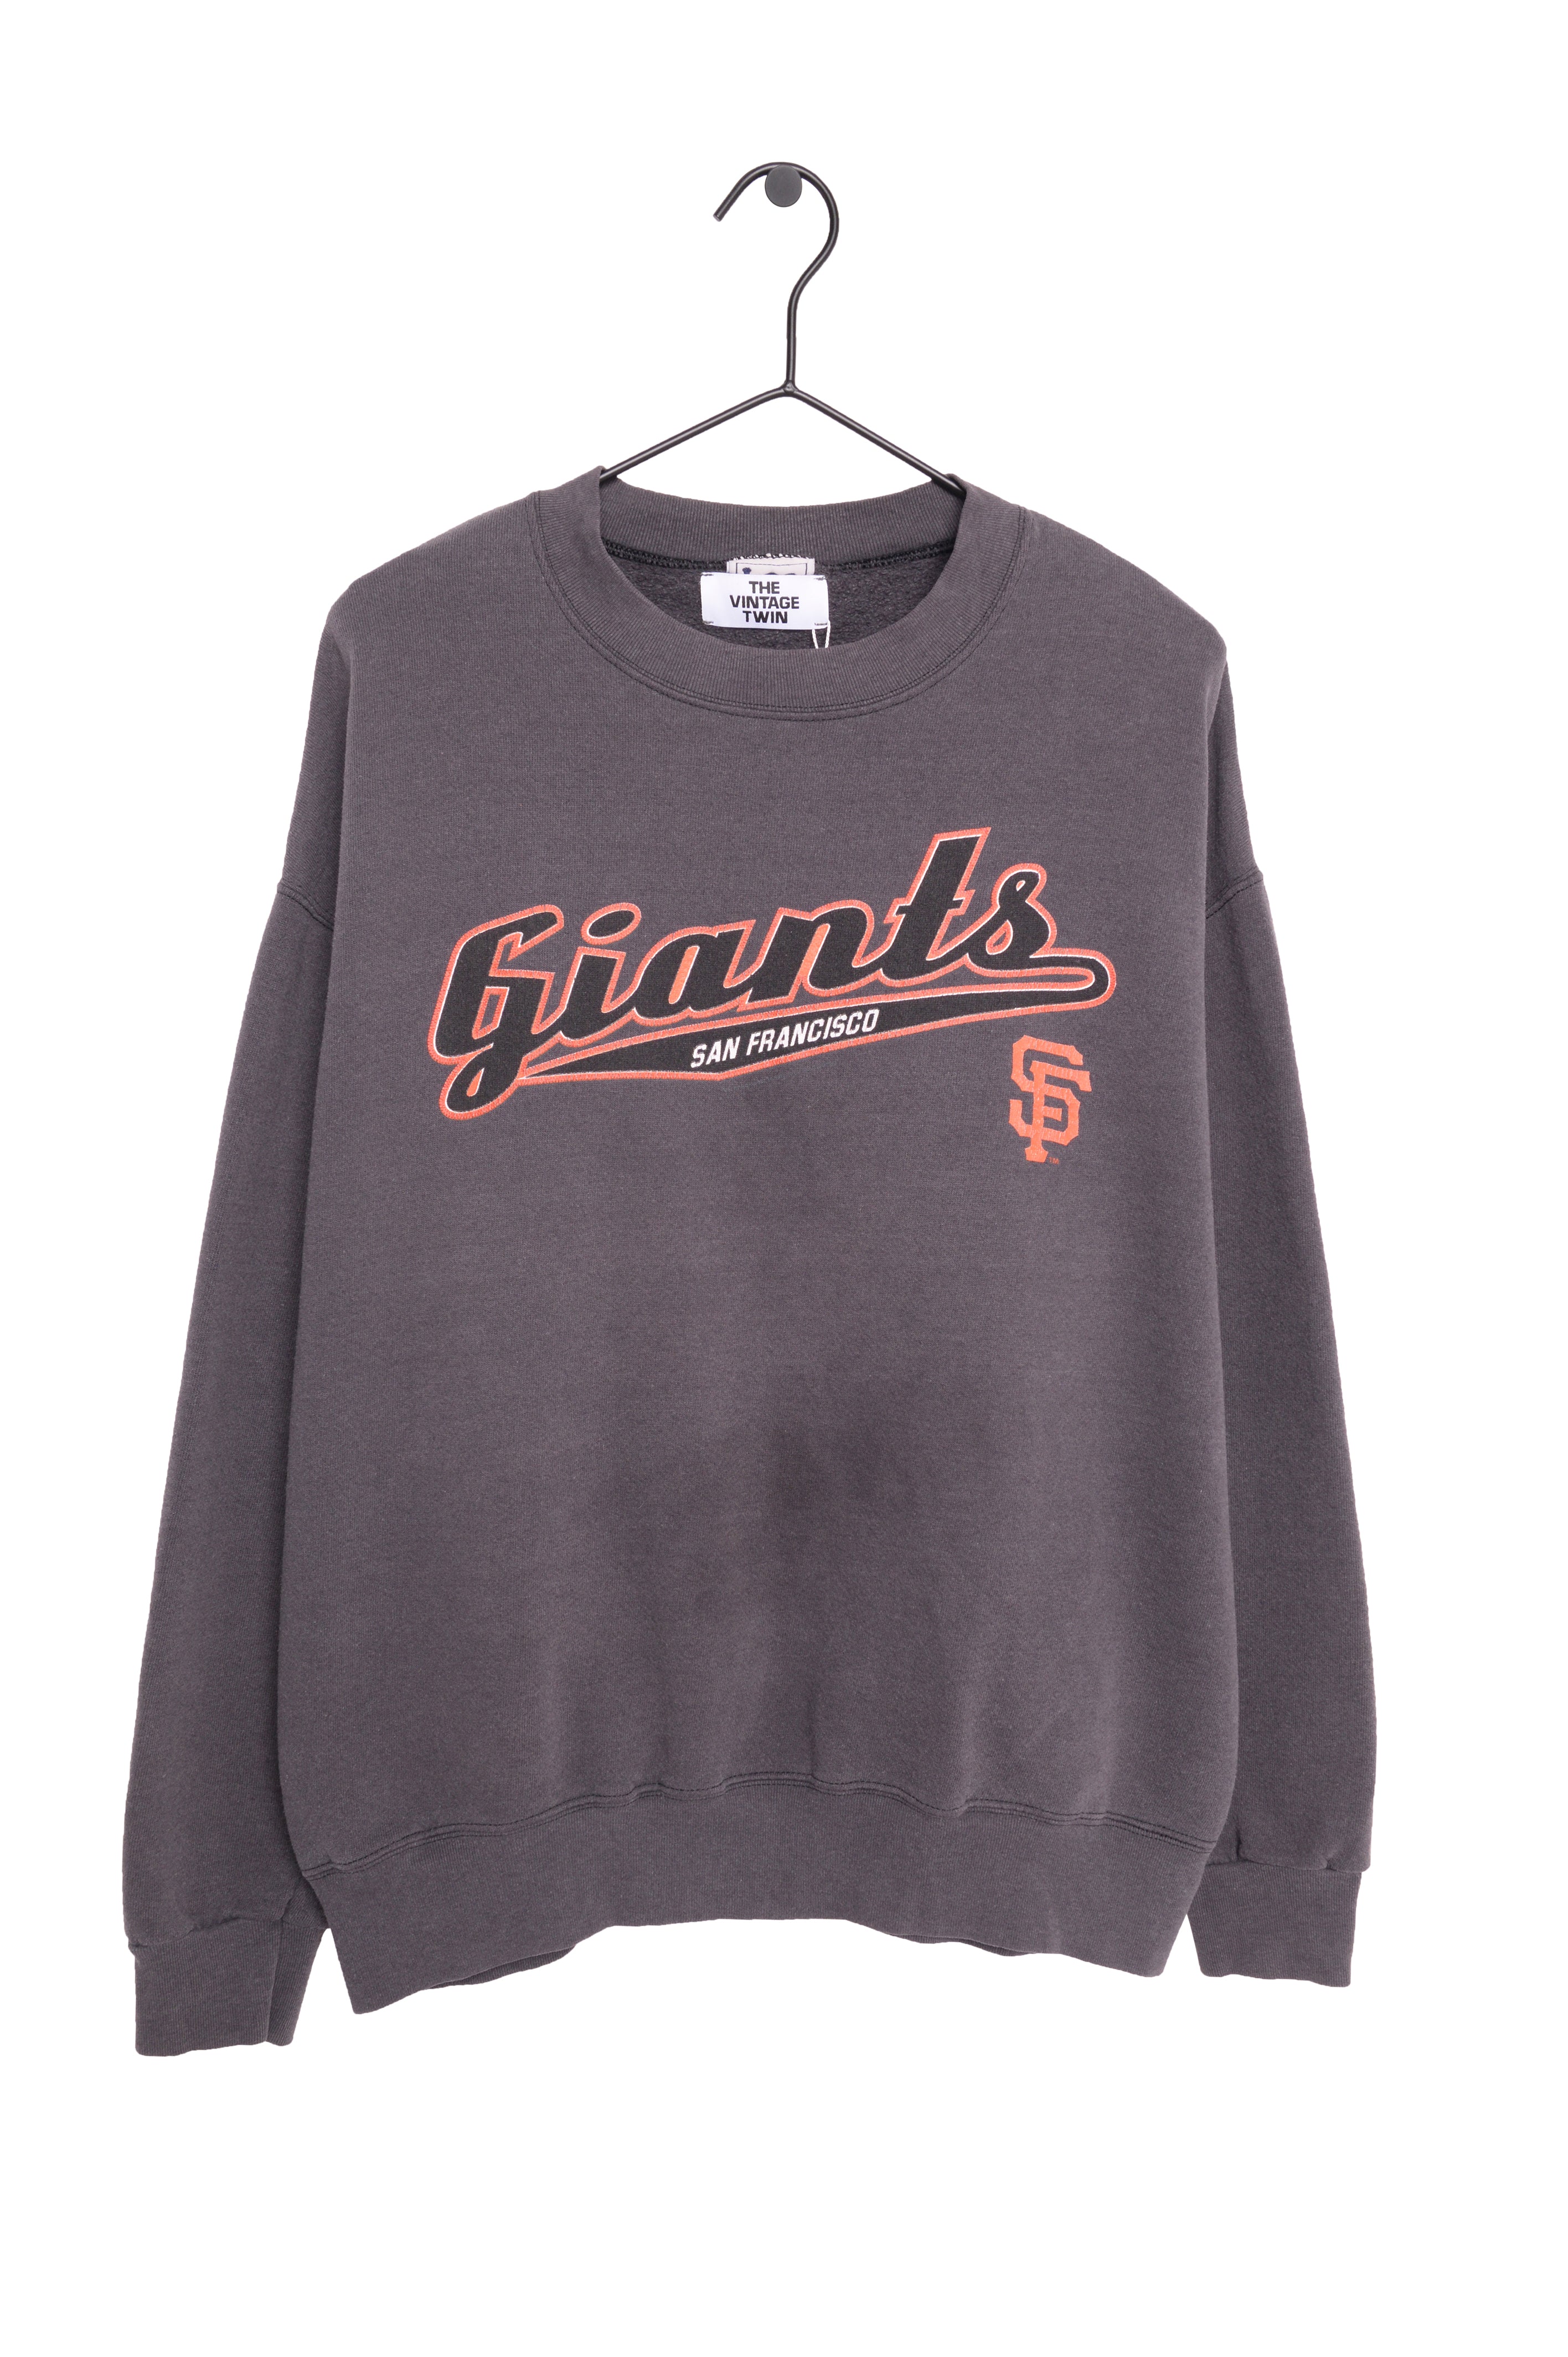 Vintage San Francisco Giants Crewneck Sweater